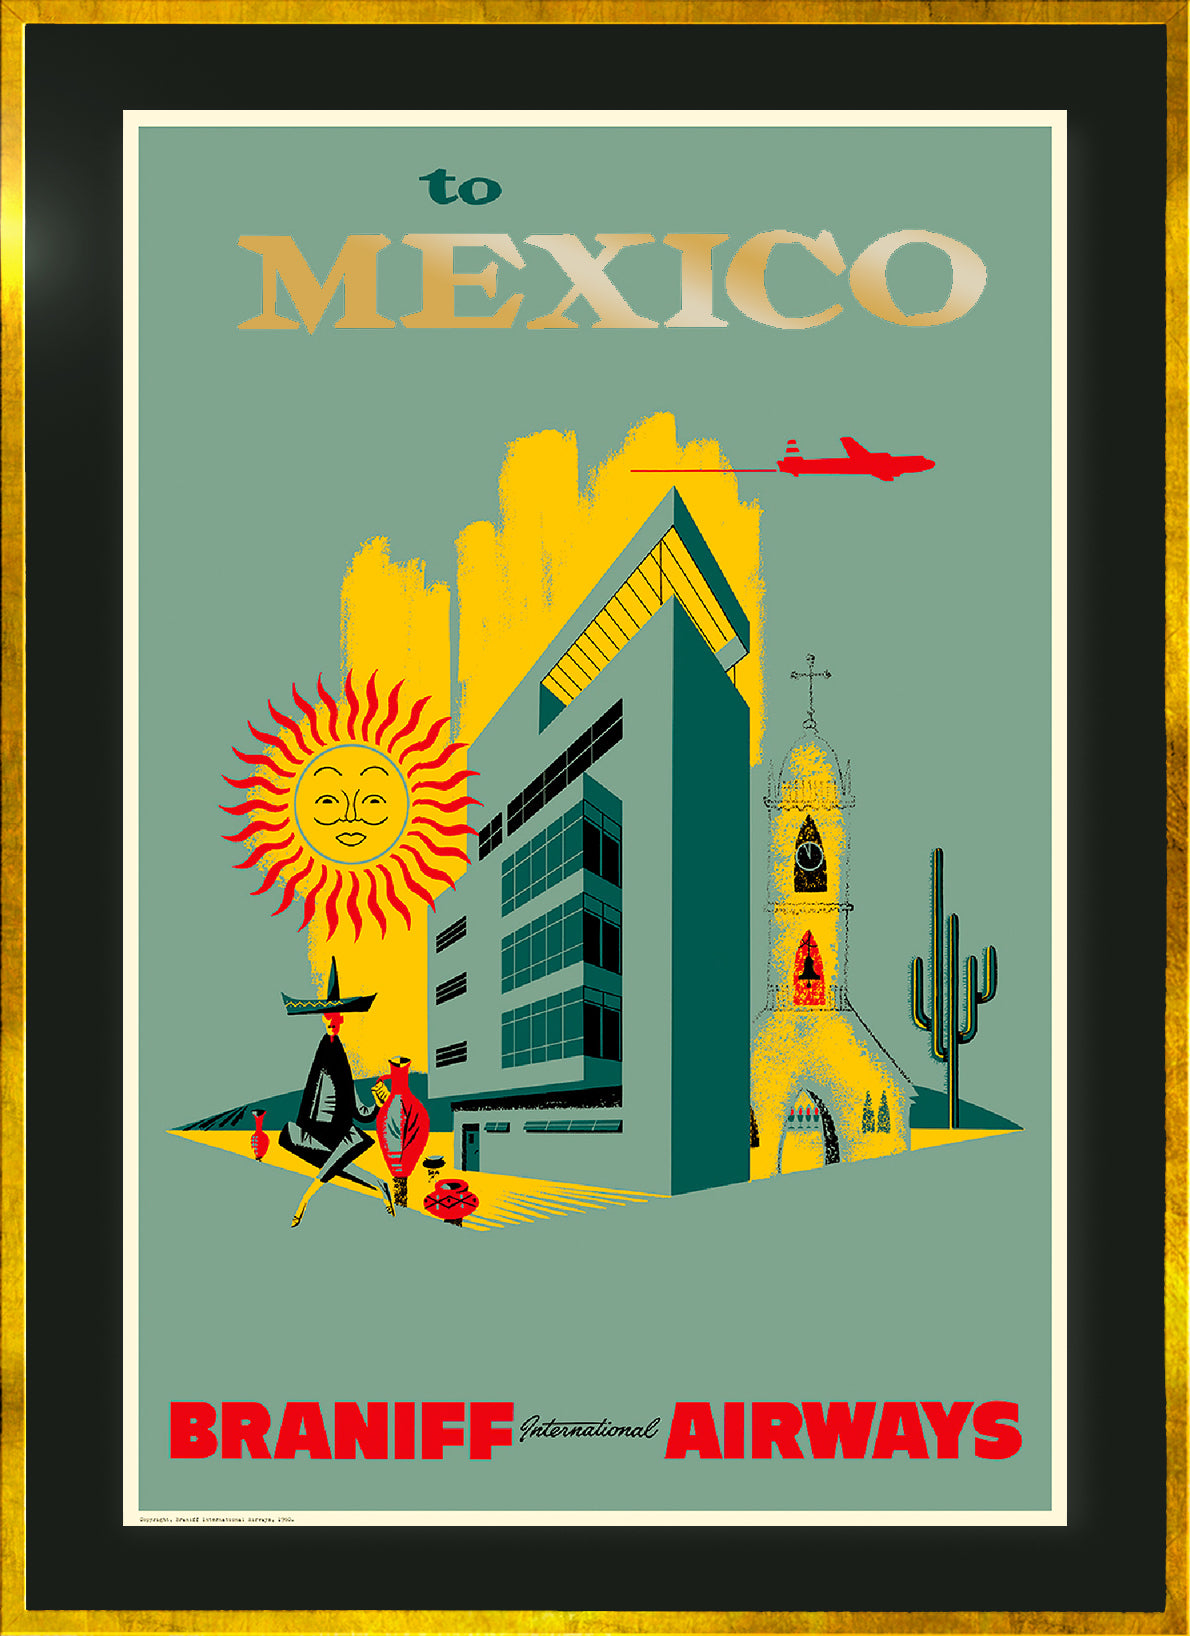 To Mexico City, Braniff International Airways, 1950s [City].